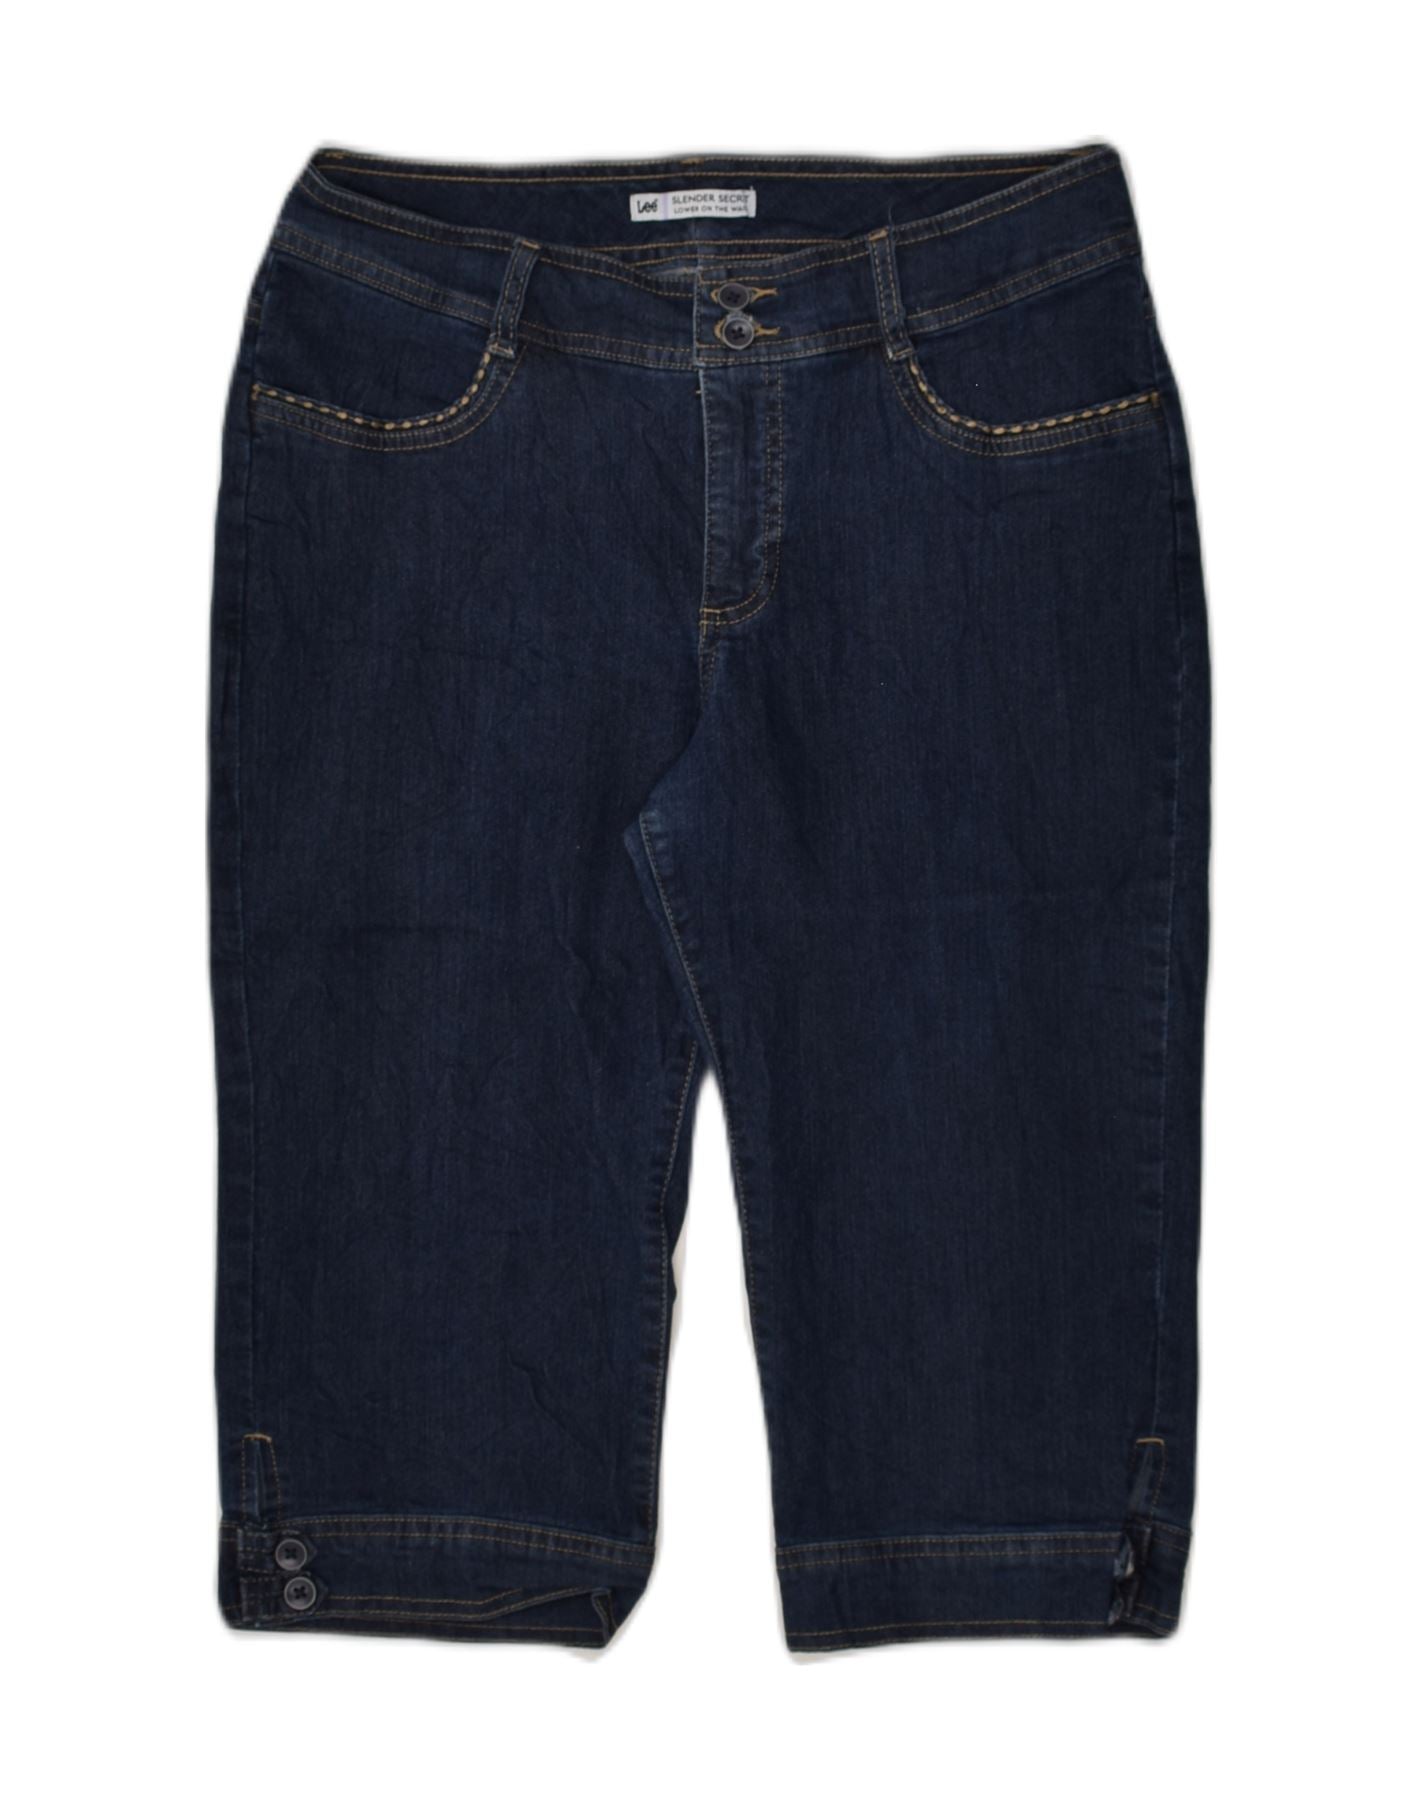 LEE Womens Slender Secret Straight Capri Jeans US 10 Large W30 L16 Blue, Vintage & Second-Hand Clothing Online